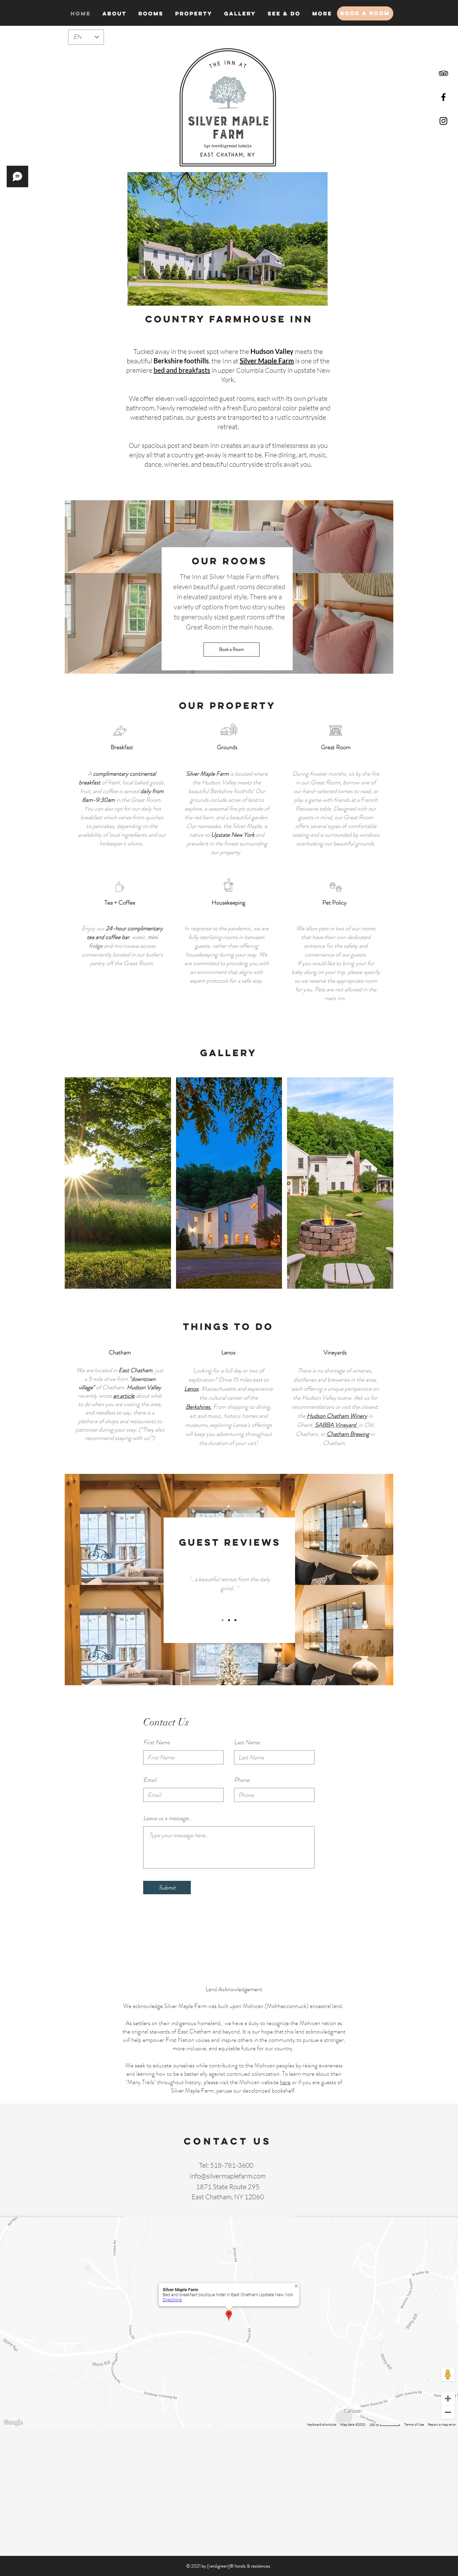 silver maple farm website design portfolio